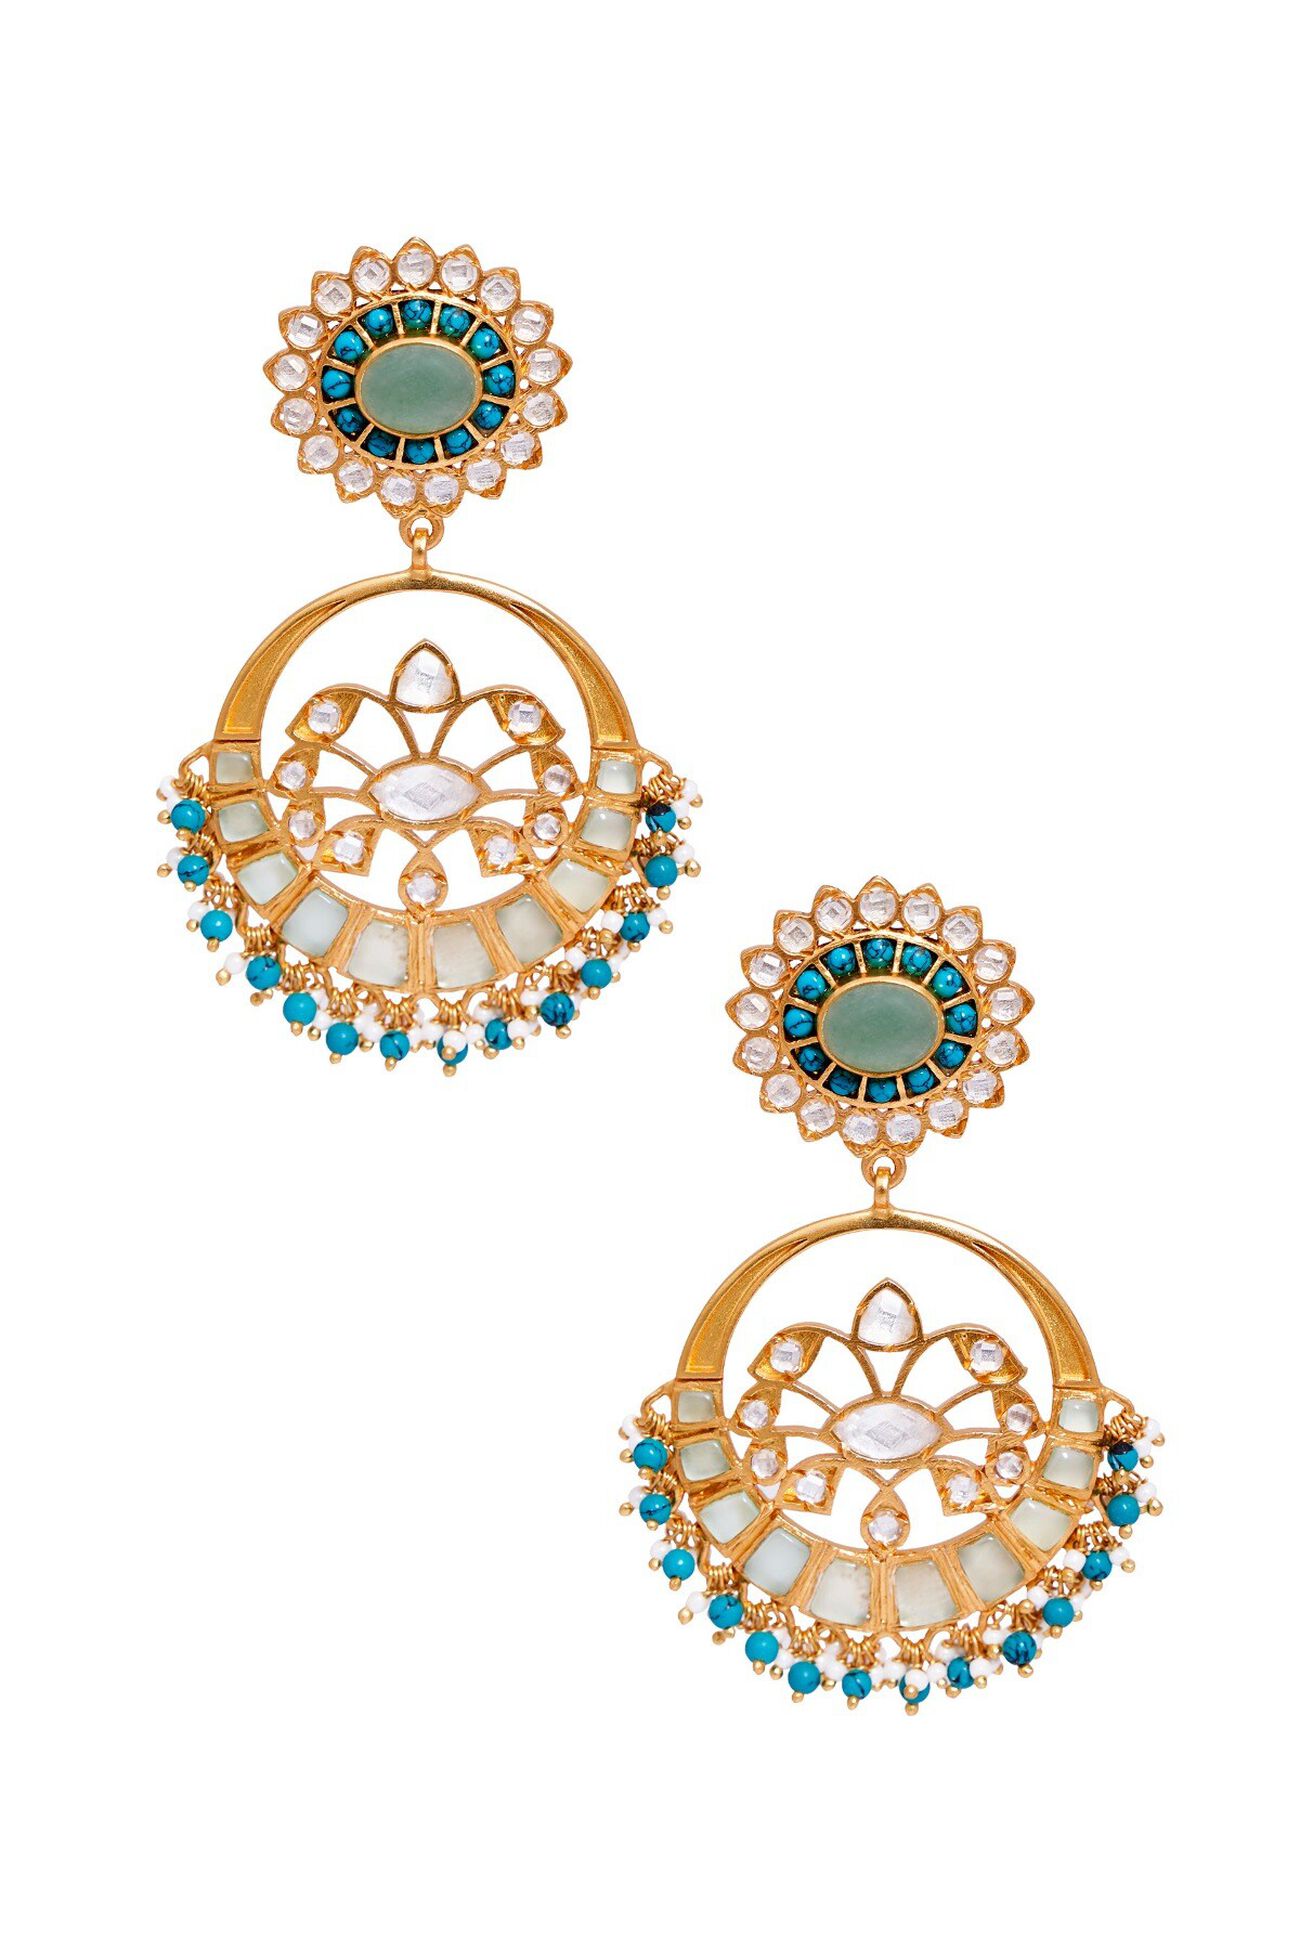 1 - Fayruz Earrings, image 1